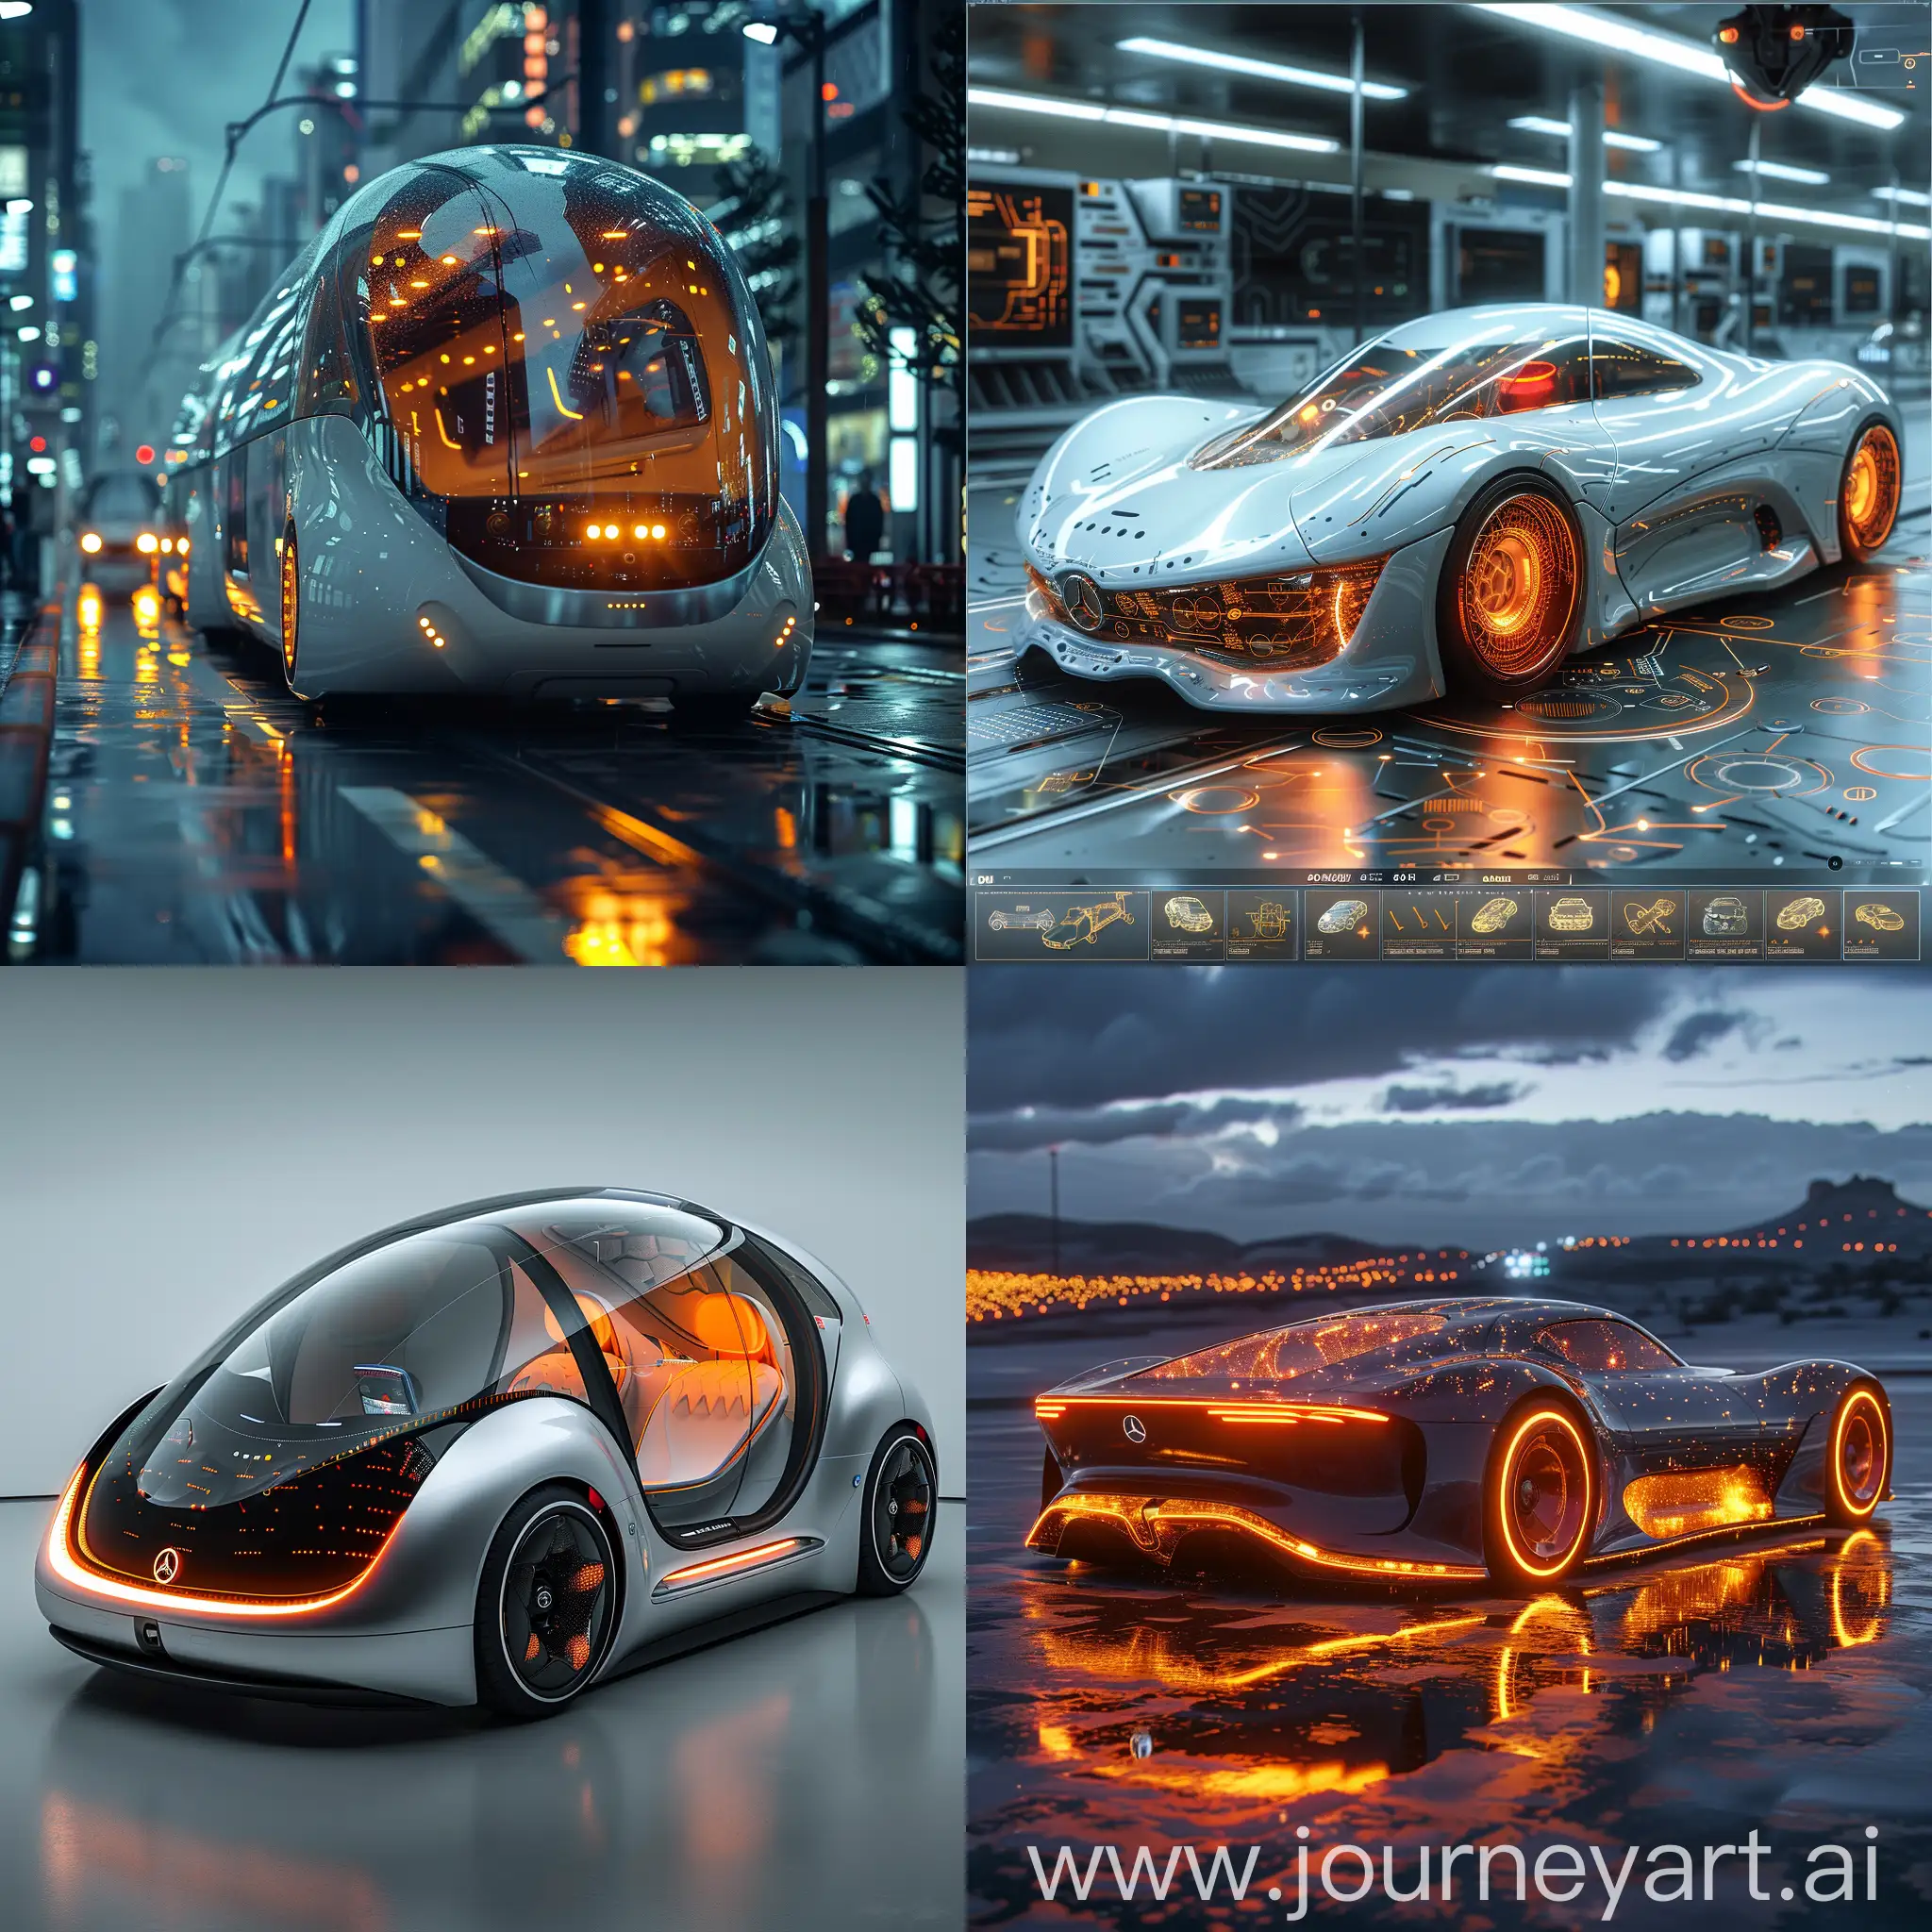 Futuristic-Autonomous-Driving-Car-with-Biometric-Identification-and-AR-Windshield